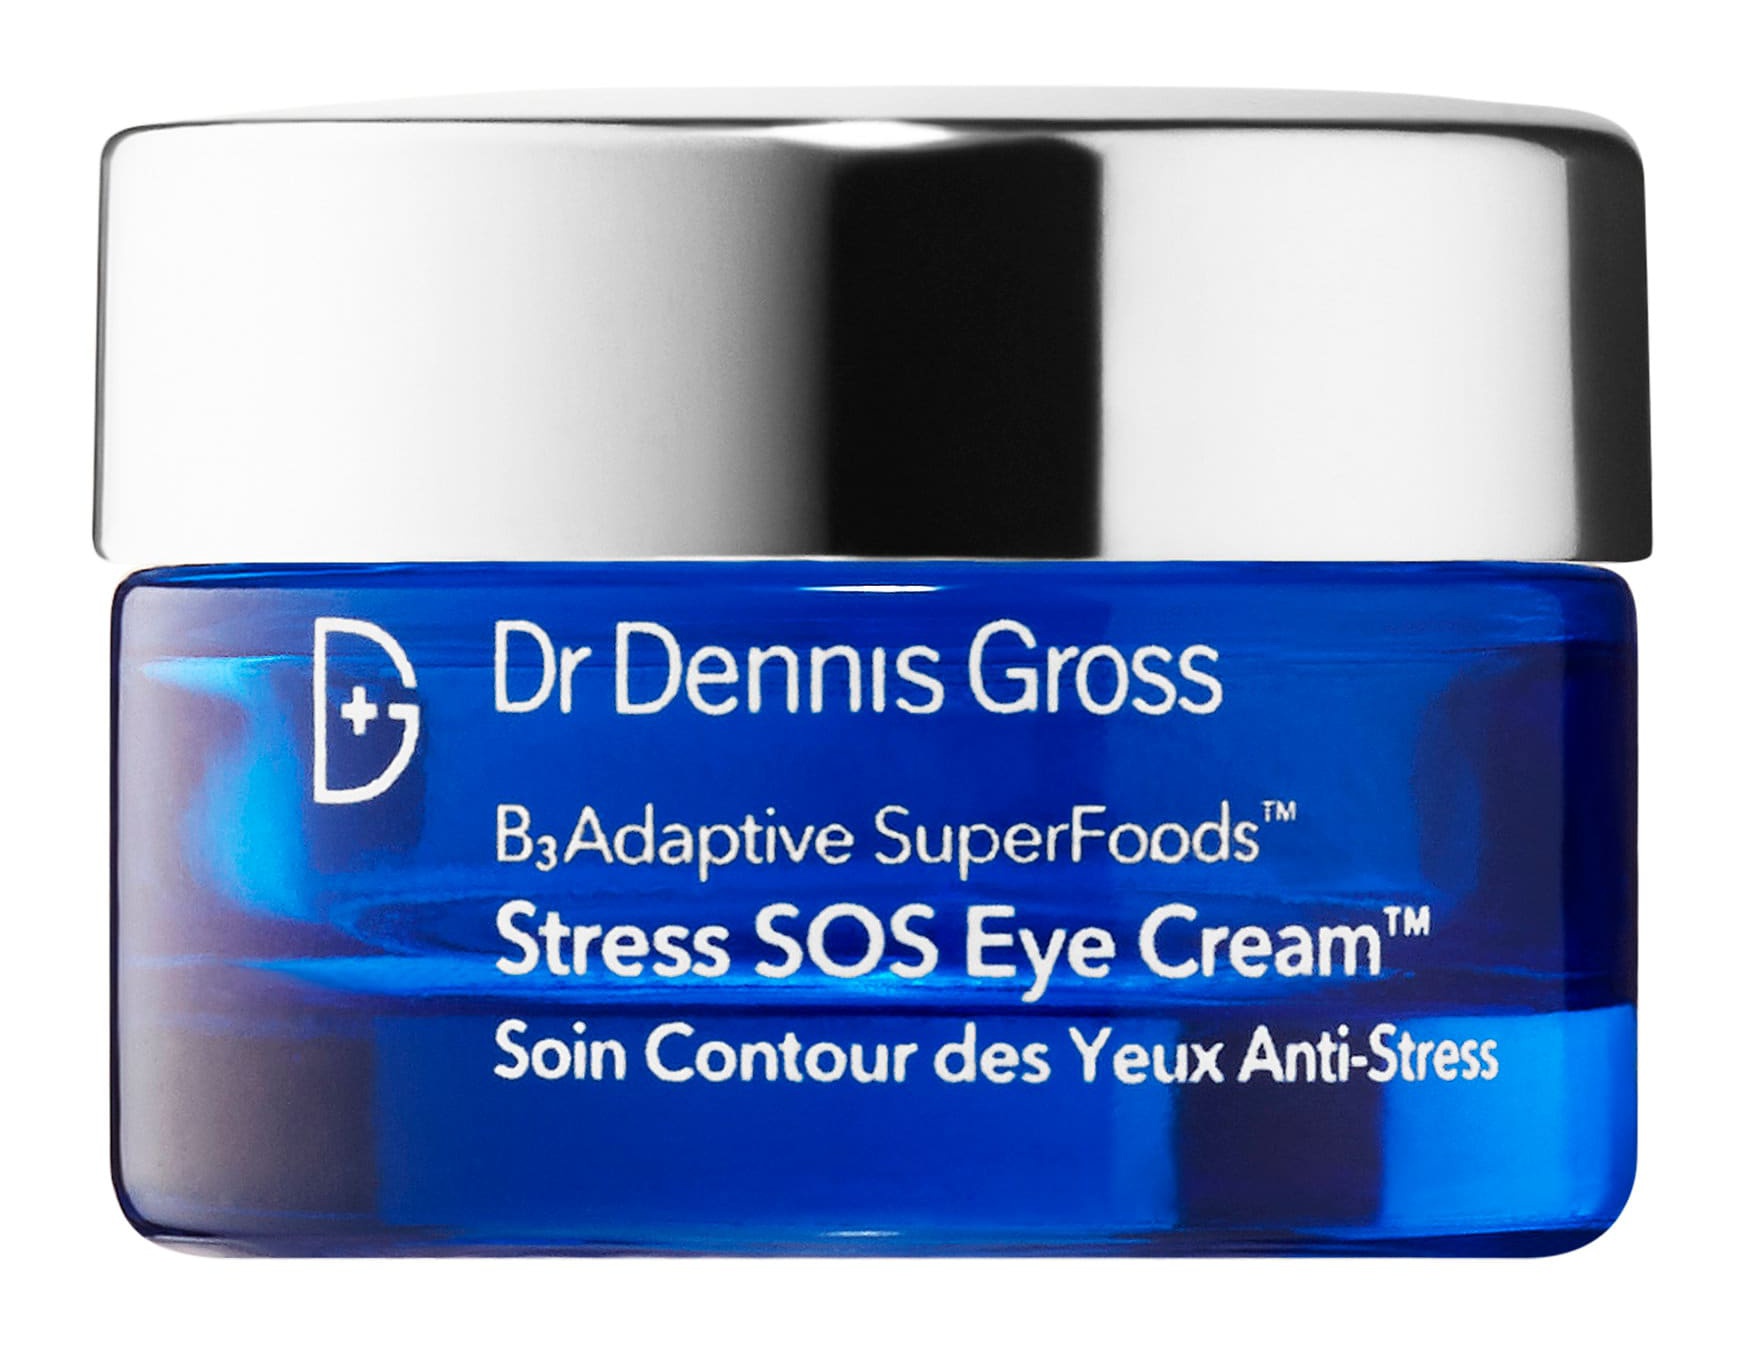 Dr Dennis Gross Stress Sos Eye Cream™ With Niacinamide